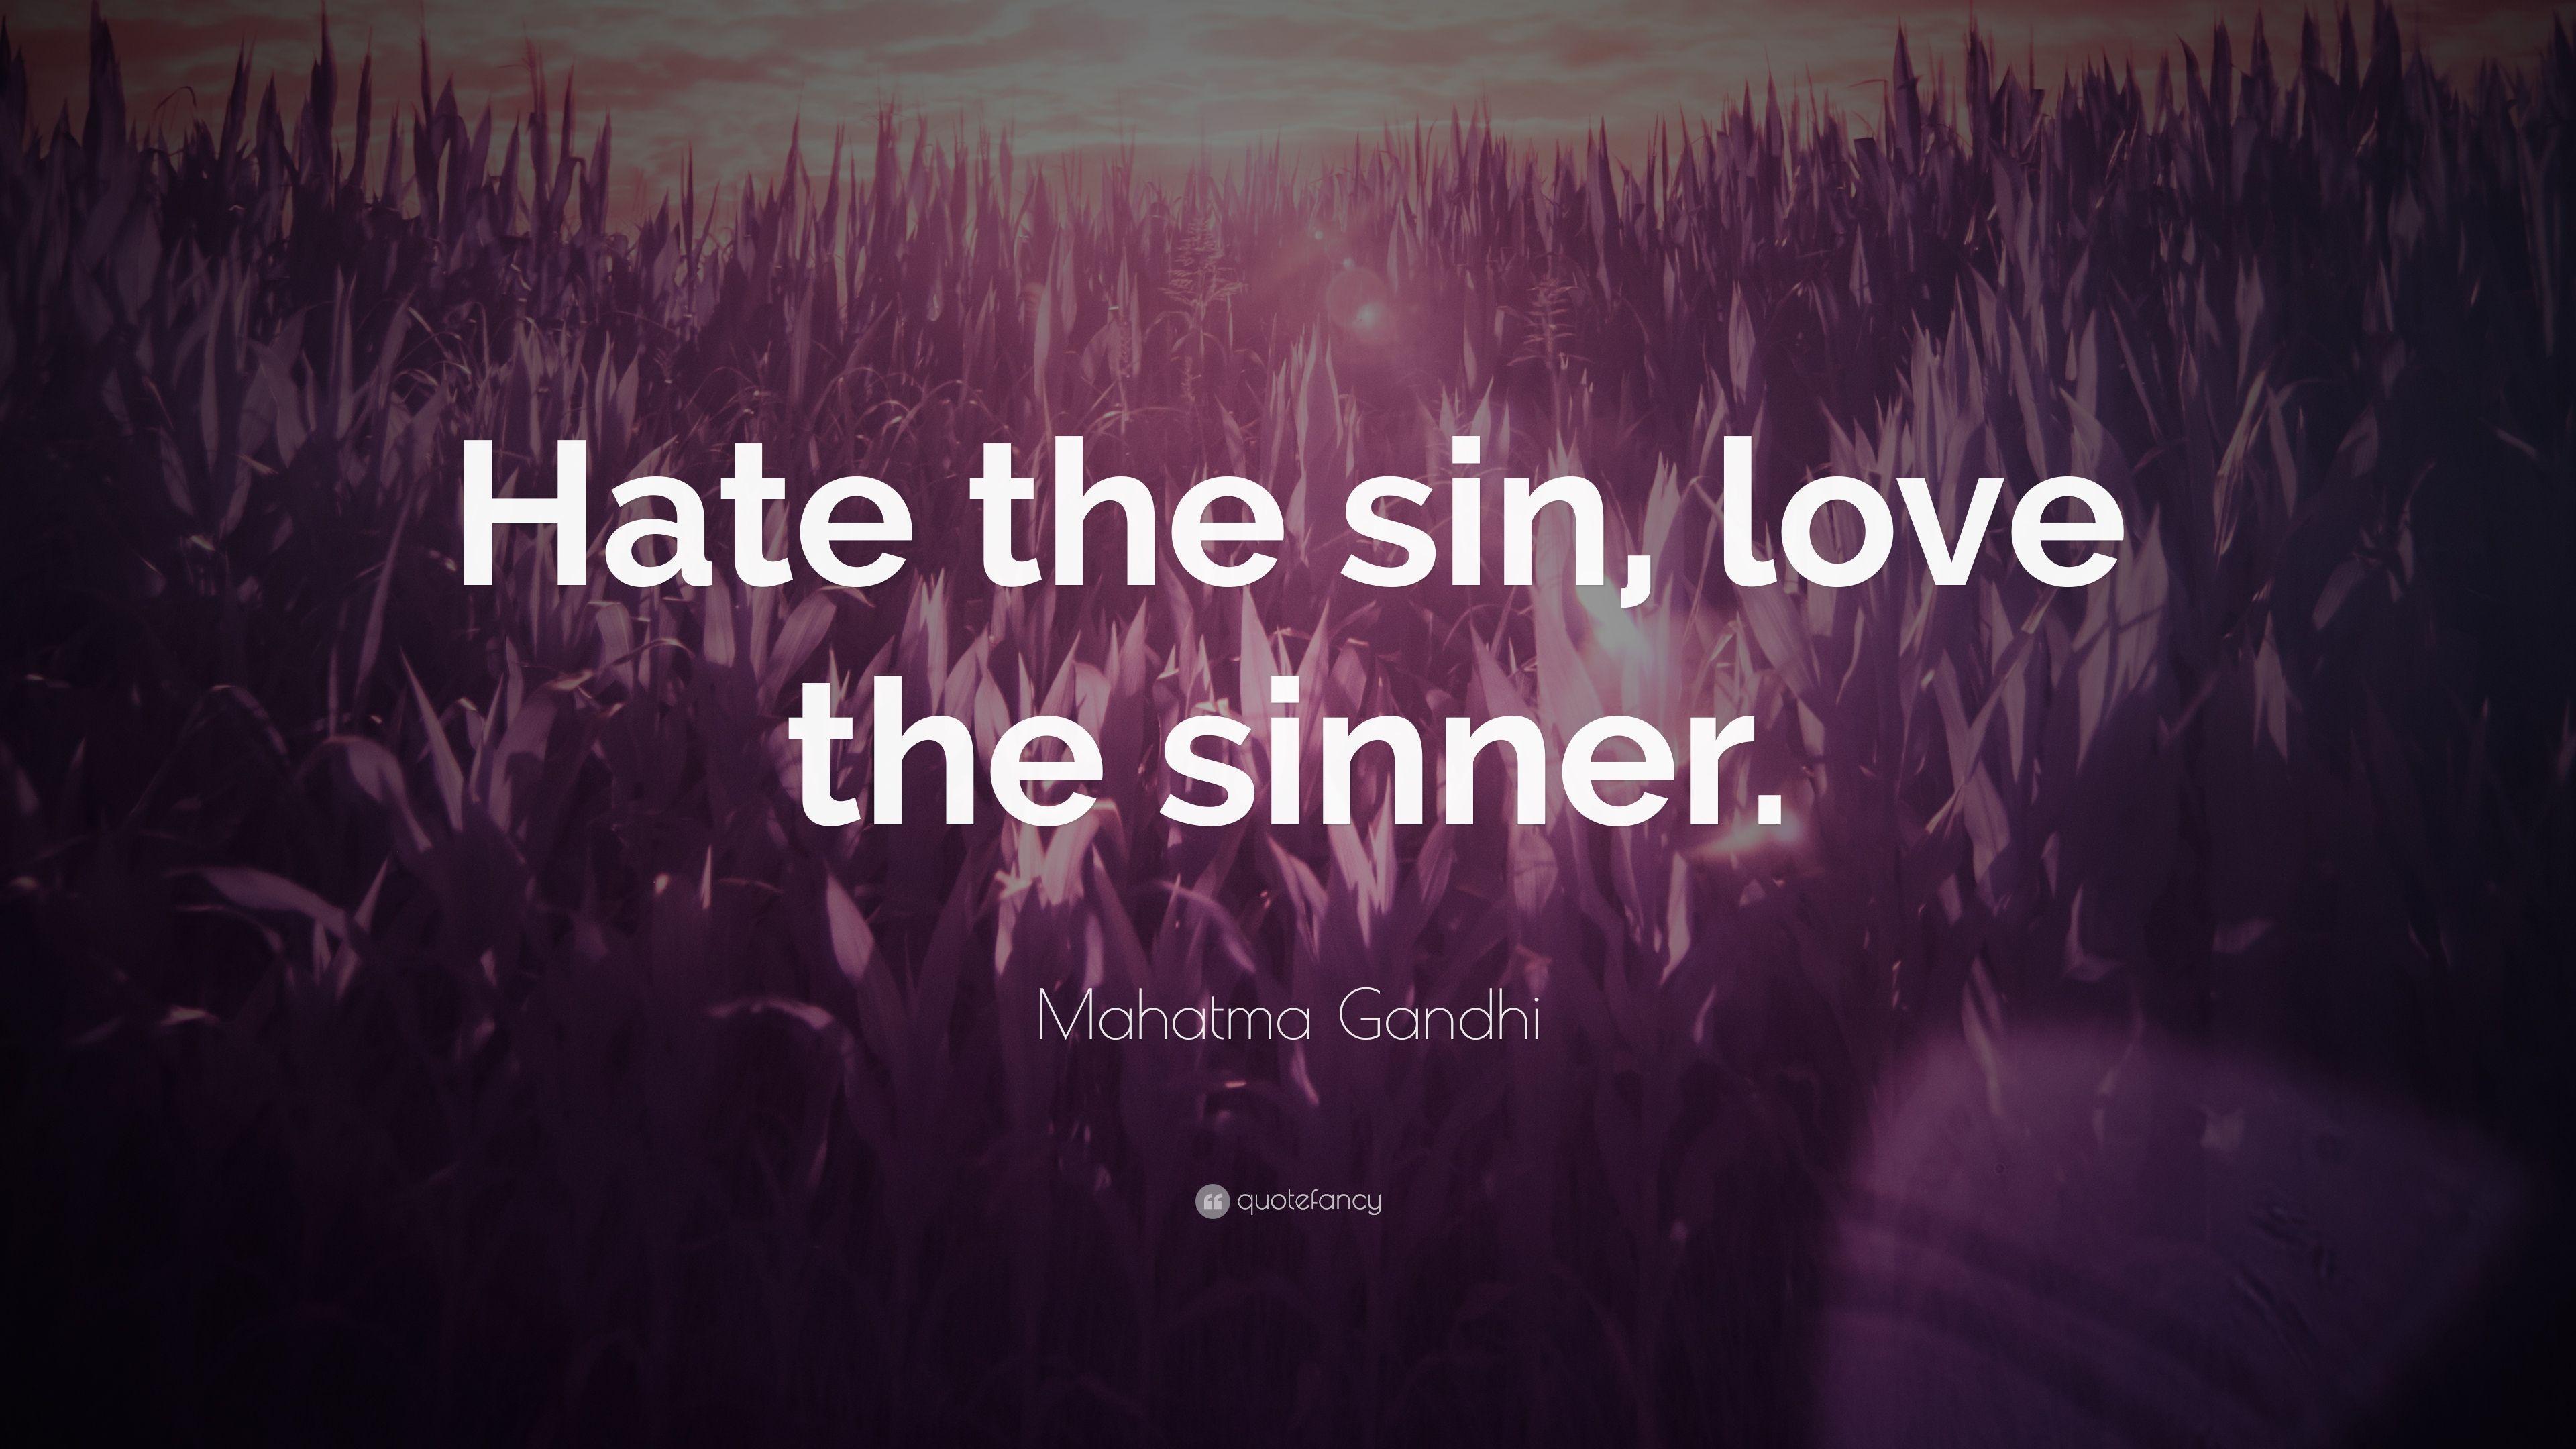 Mahatma Gandhi Quote: “Hate the sin, love the sinner.” 16